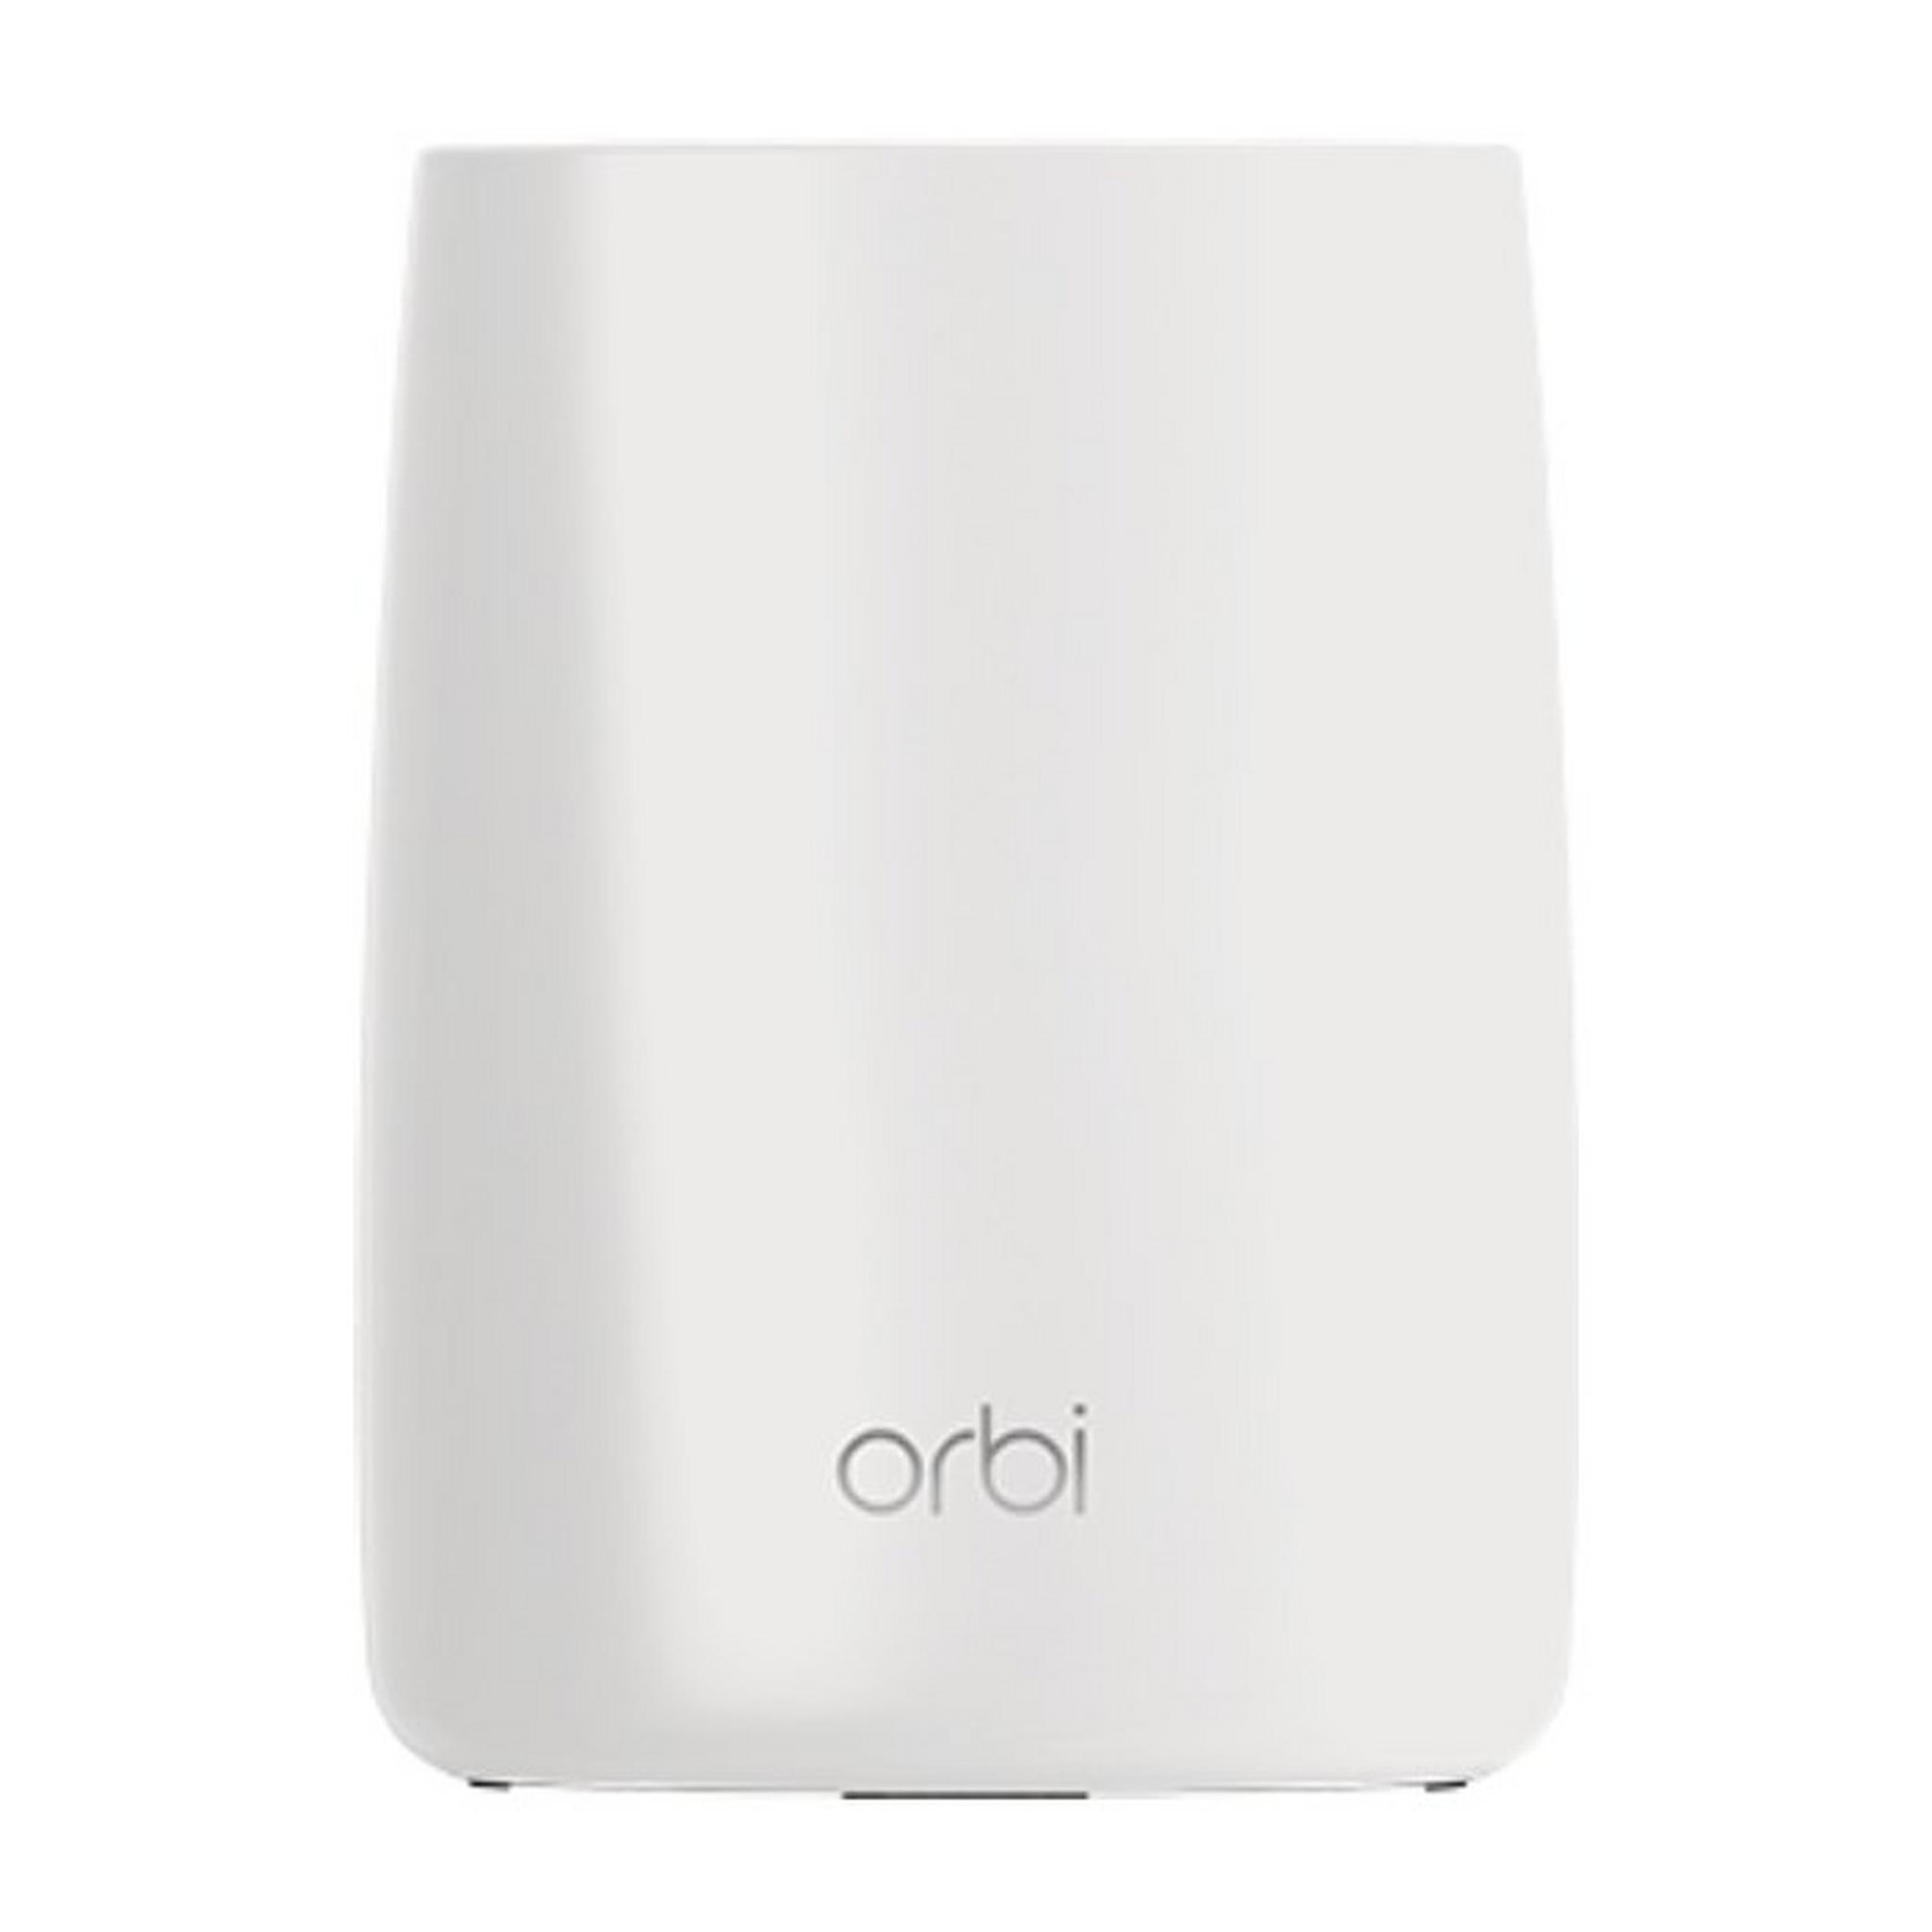 Orbi AC3000 Mesh Tri-Band WiFi System (RBK53)